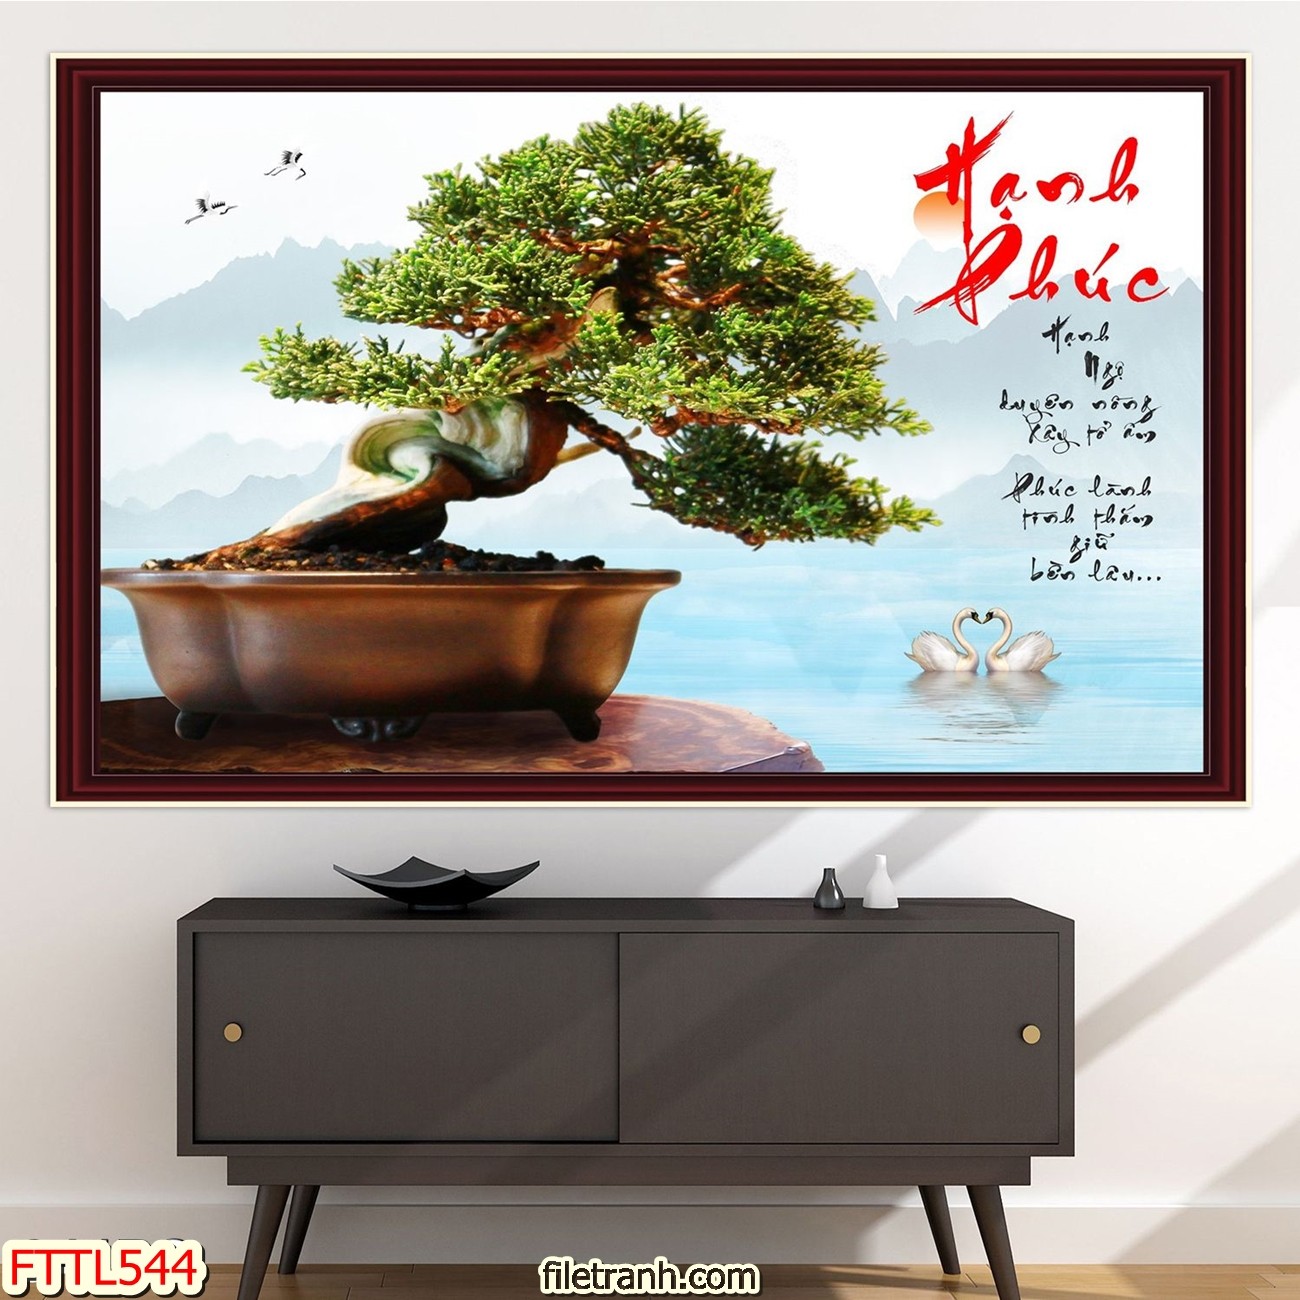 https://filetranh.com/file-tranh-chau-mai-bonsai/file-tranh-chau-mai-bonsai-fttl544.html